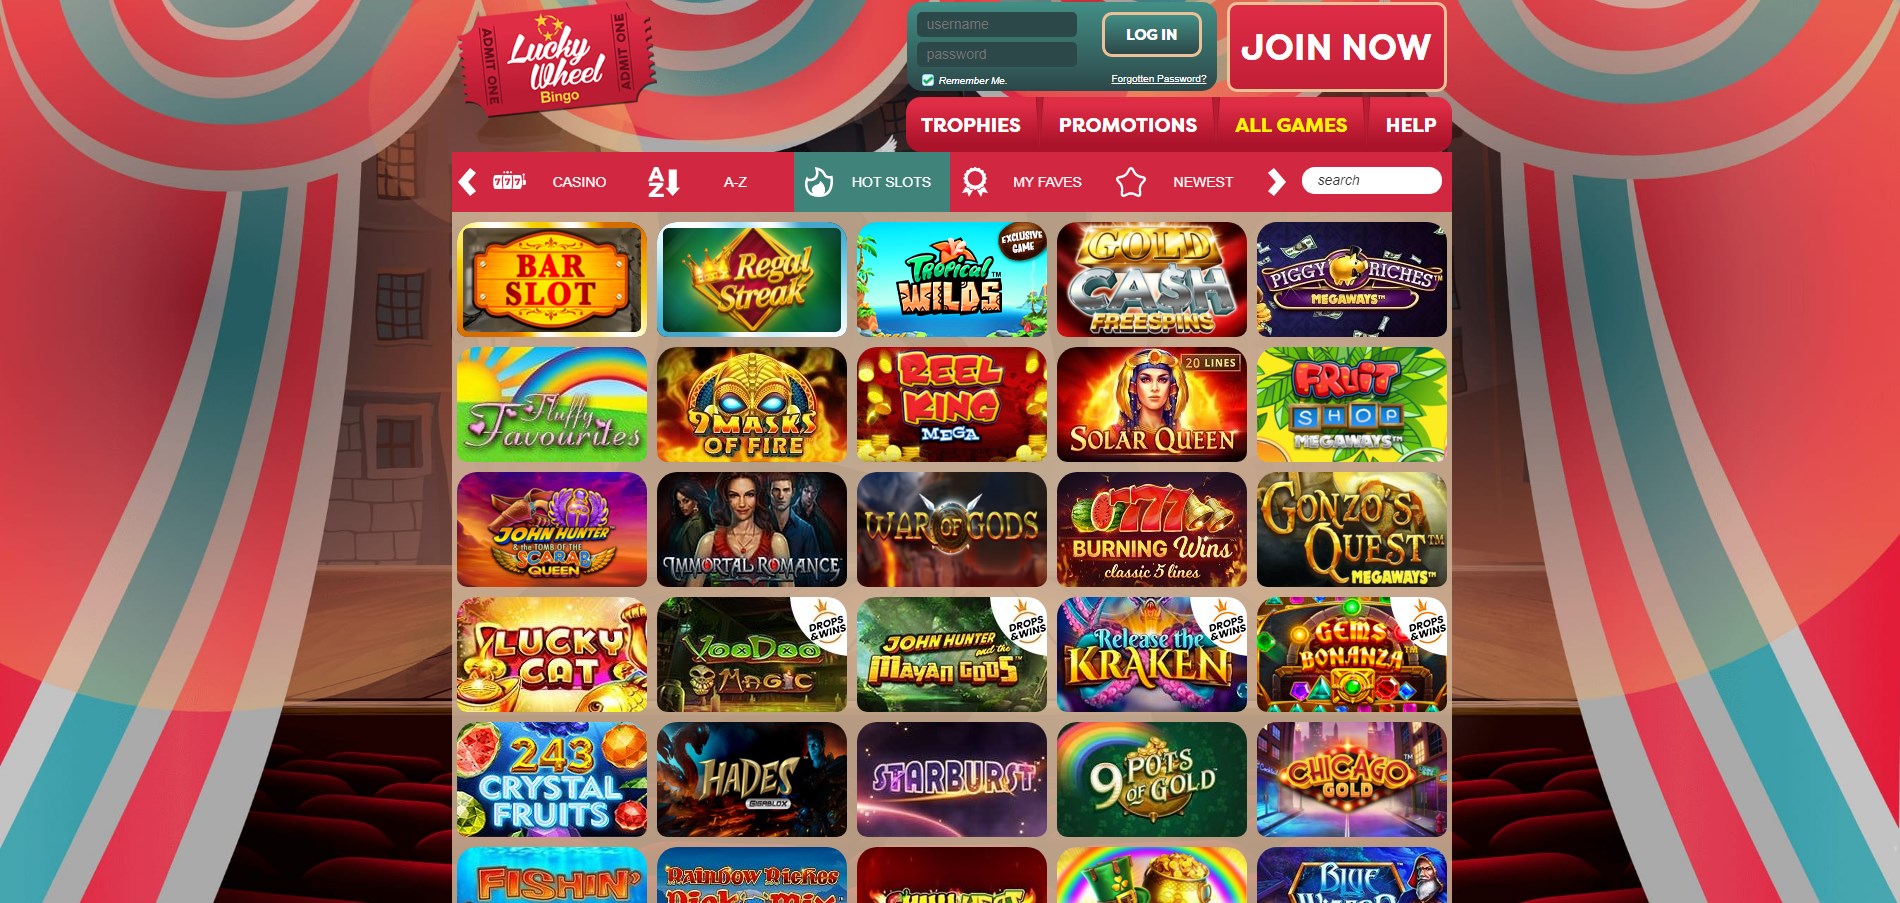 Lucky Wheel Bingo Casino Games